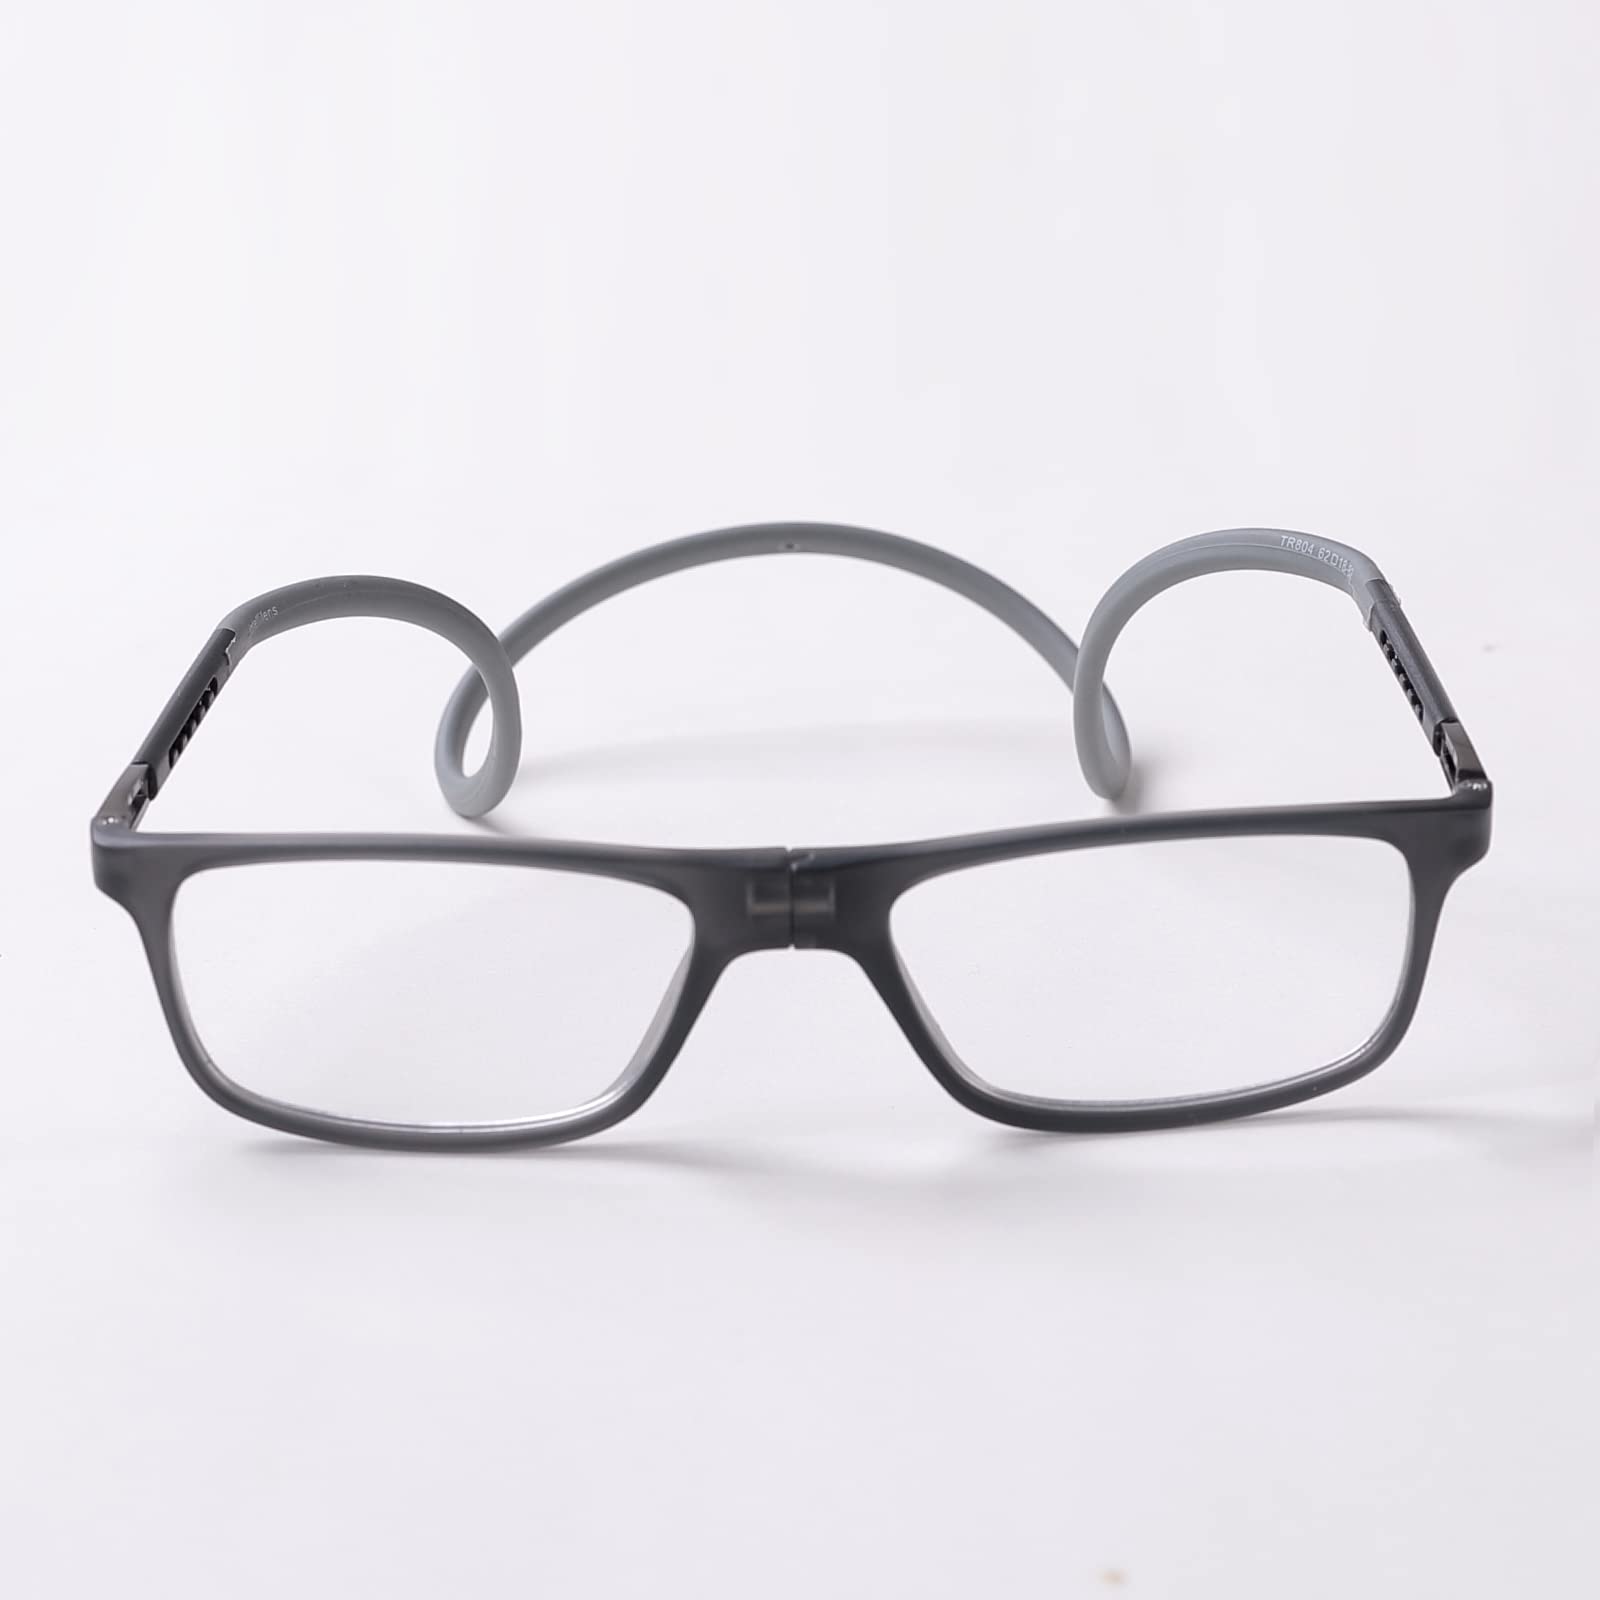 Intellilens Magnetic Reading Glasses For Men & Women For Near Vision | UV Protected | Foldable | Anti Reflection | Lightweight & Portable | Power (+2.00) | Grey